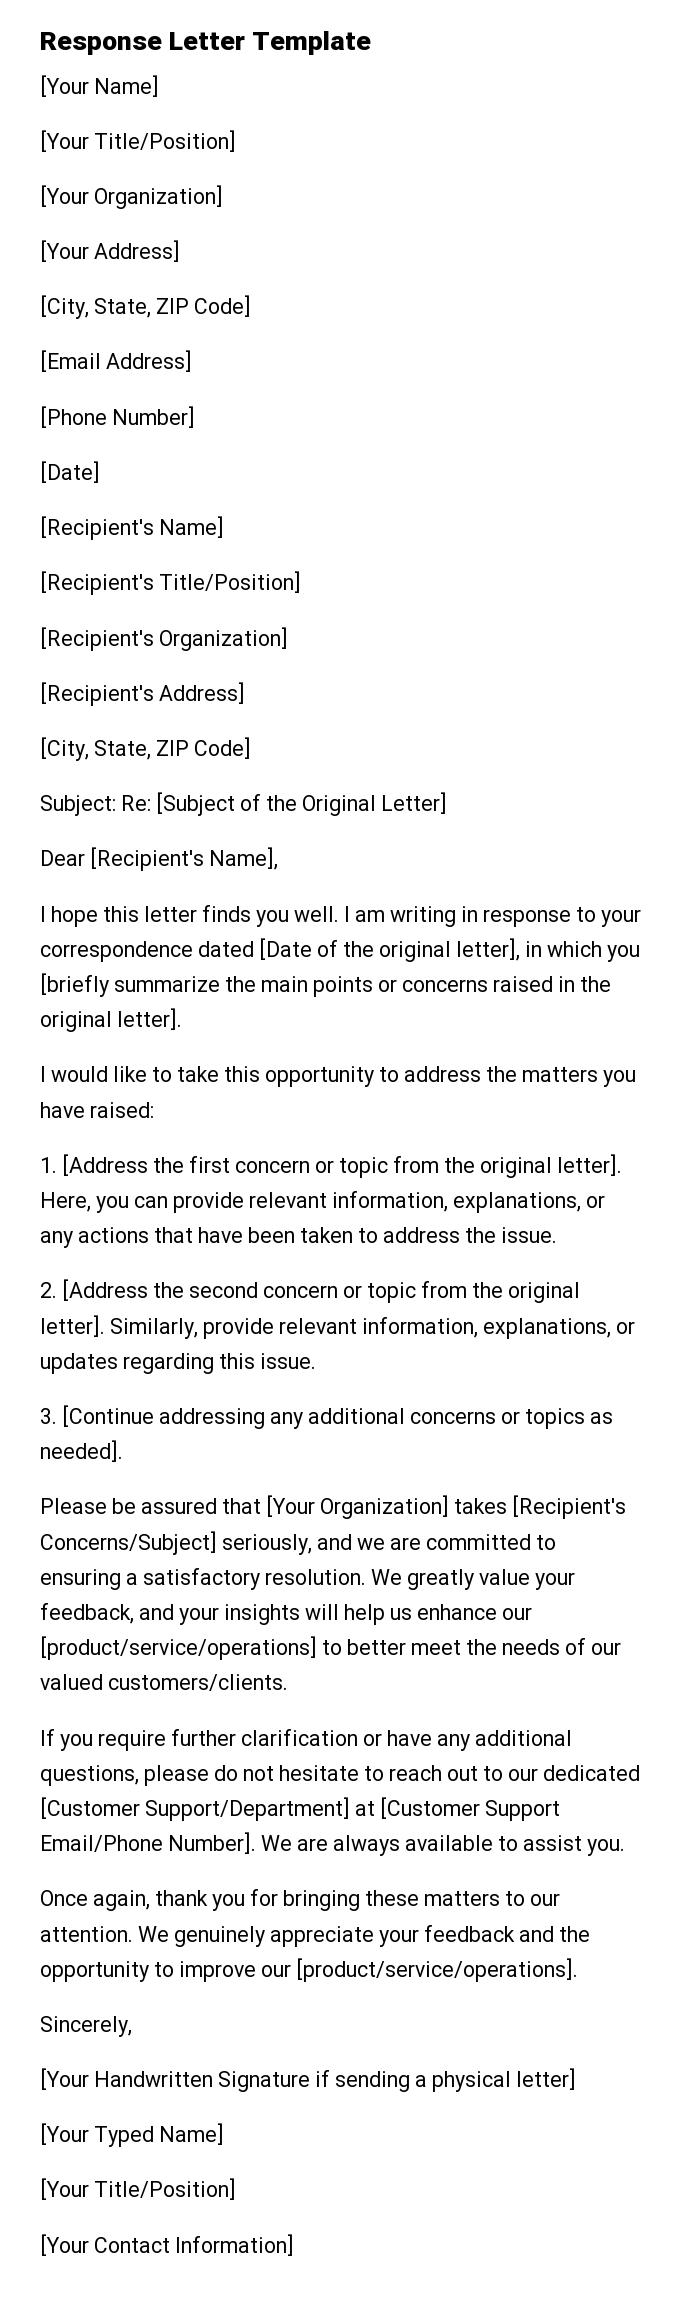 Response Letter Template